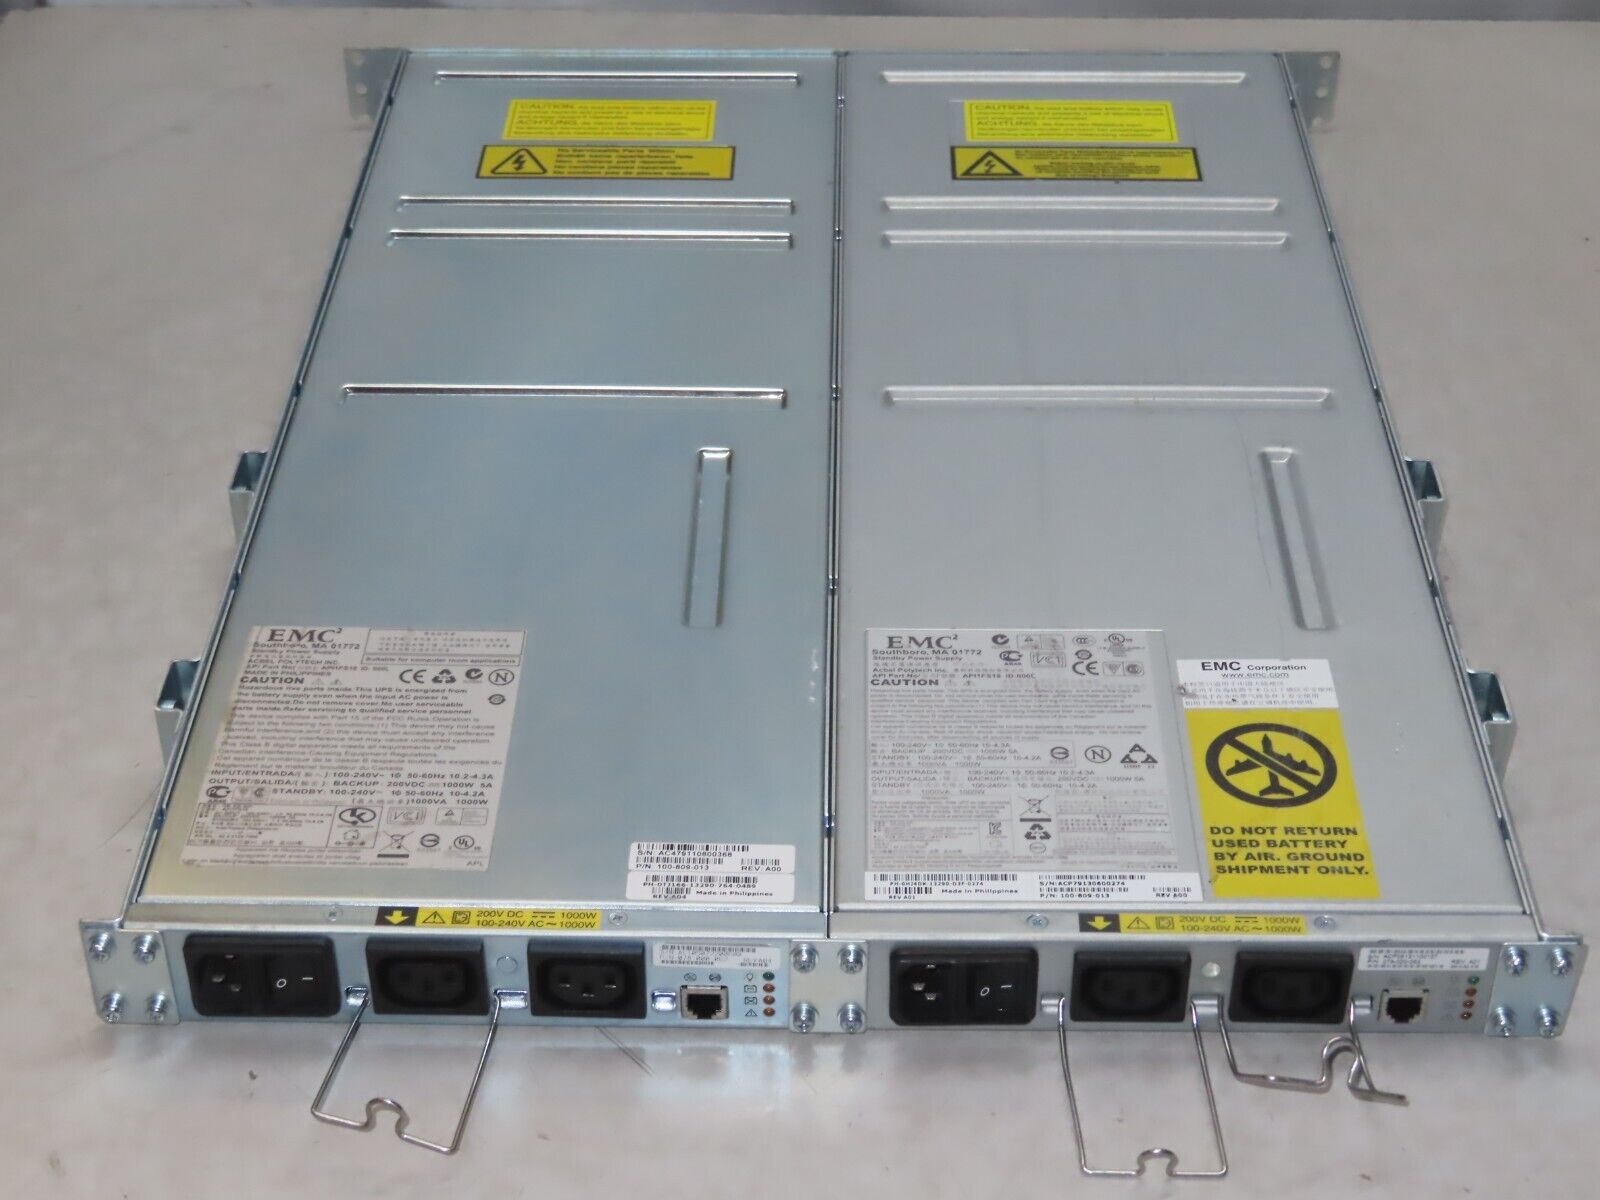 2x EMC2 Southboro MA01772 Standby Server Power Supply - ** Dual Mount Bracket **